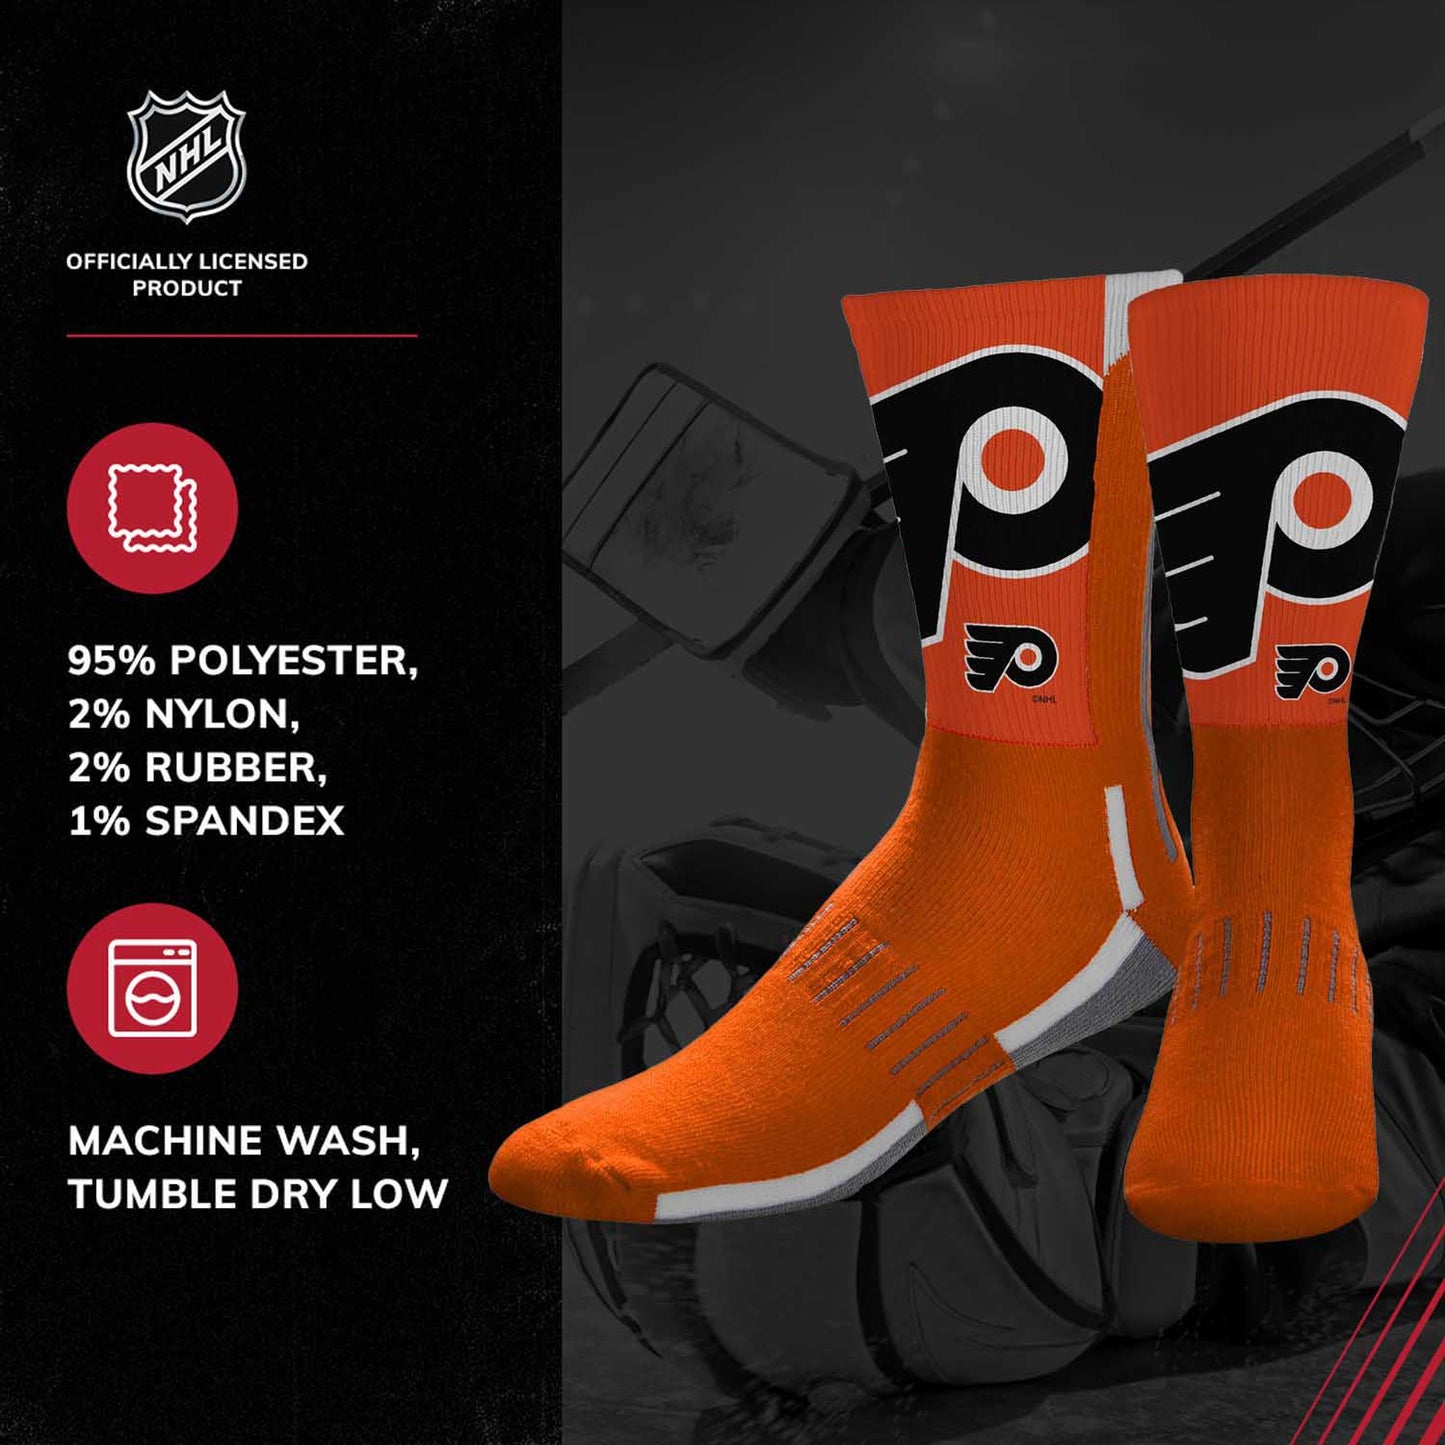 Philadelphia Flyers Youth NHL Zoom Curve Team Crew Socks - Orange